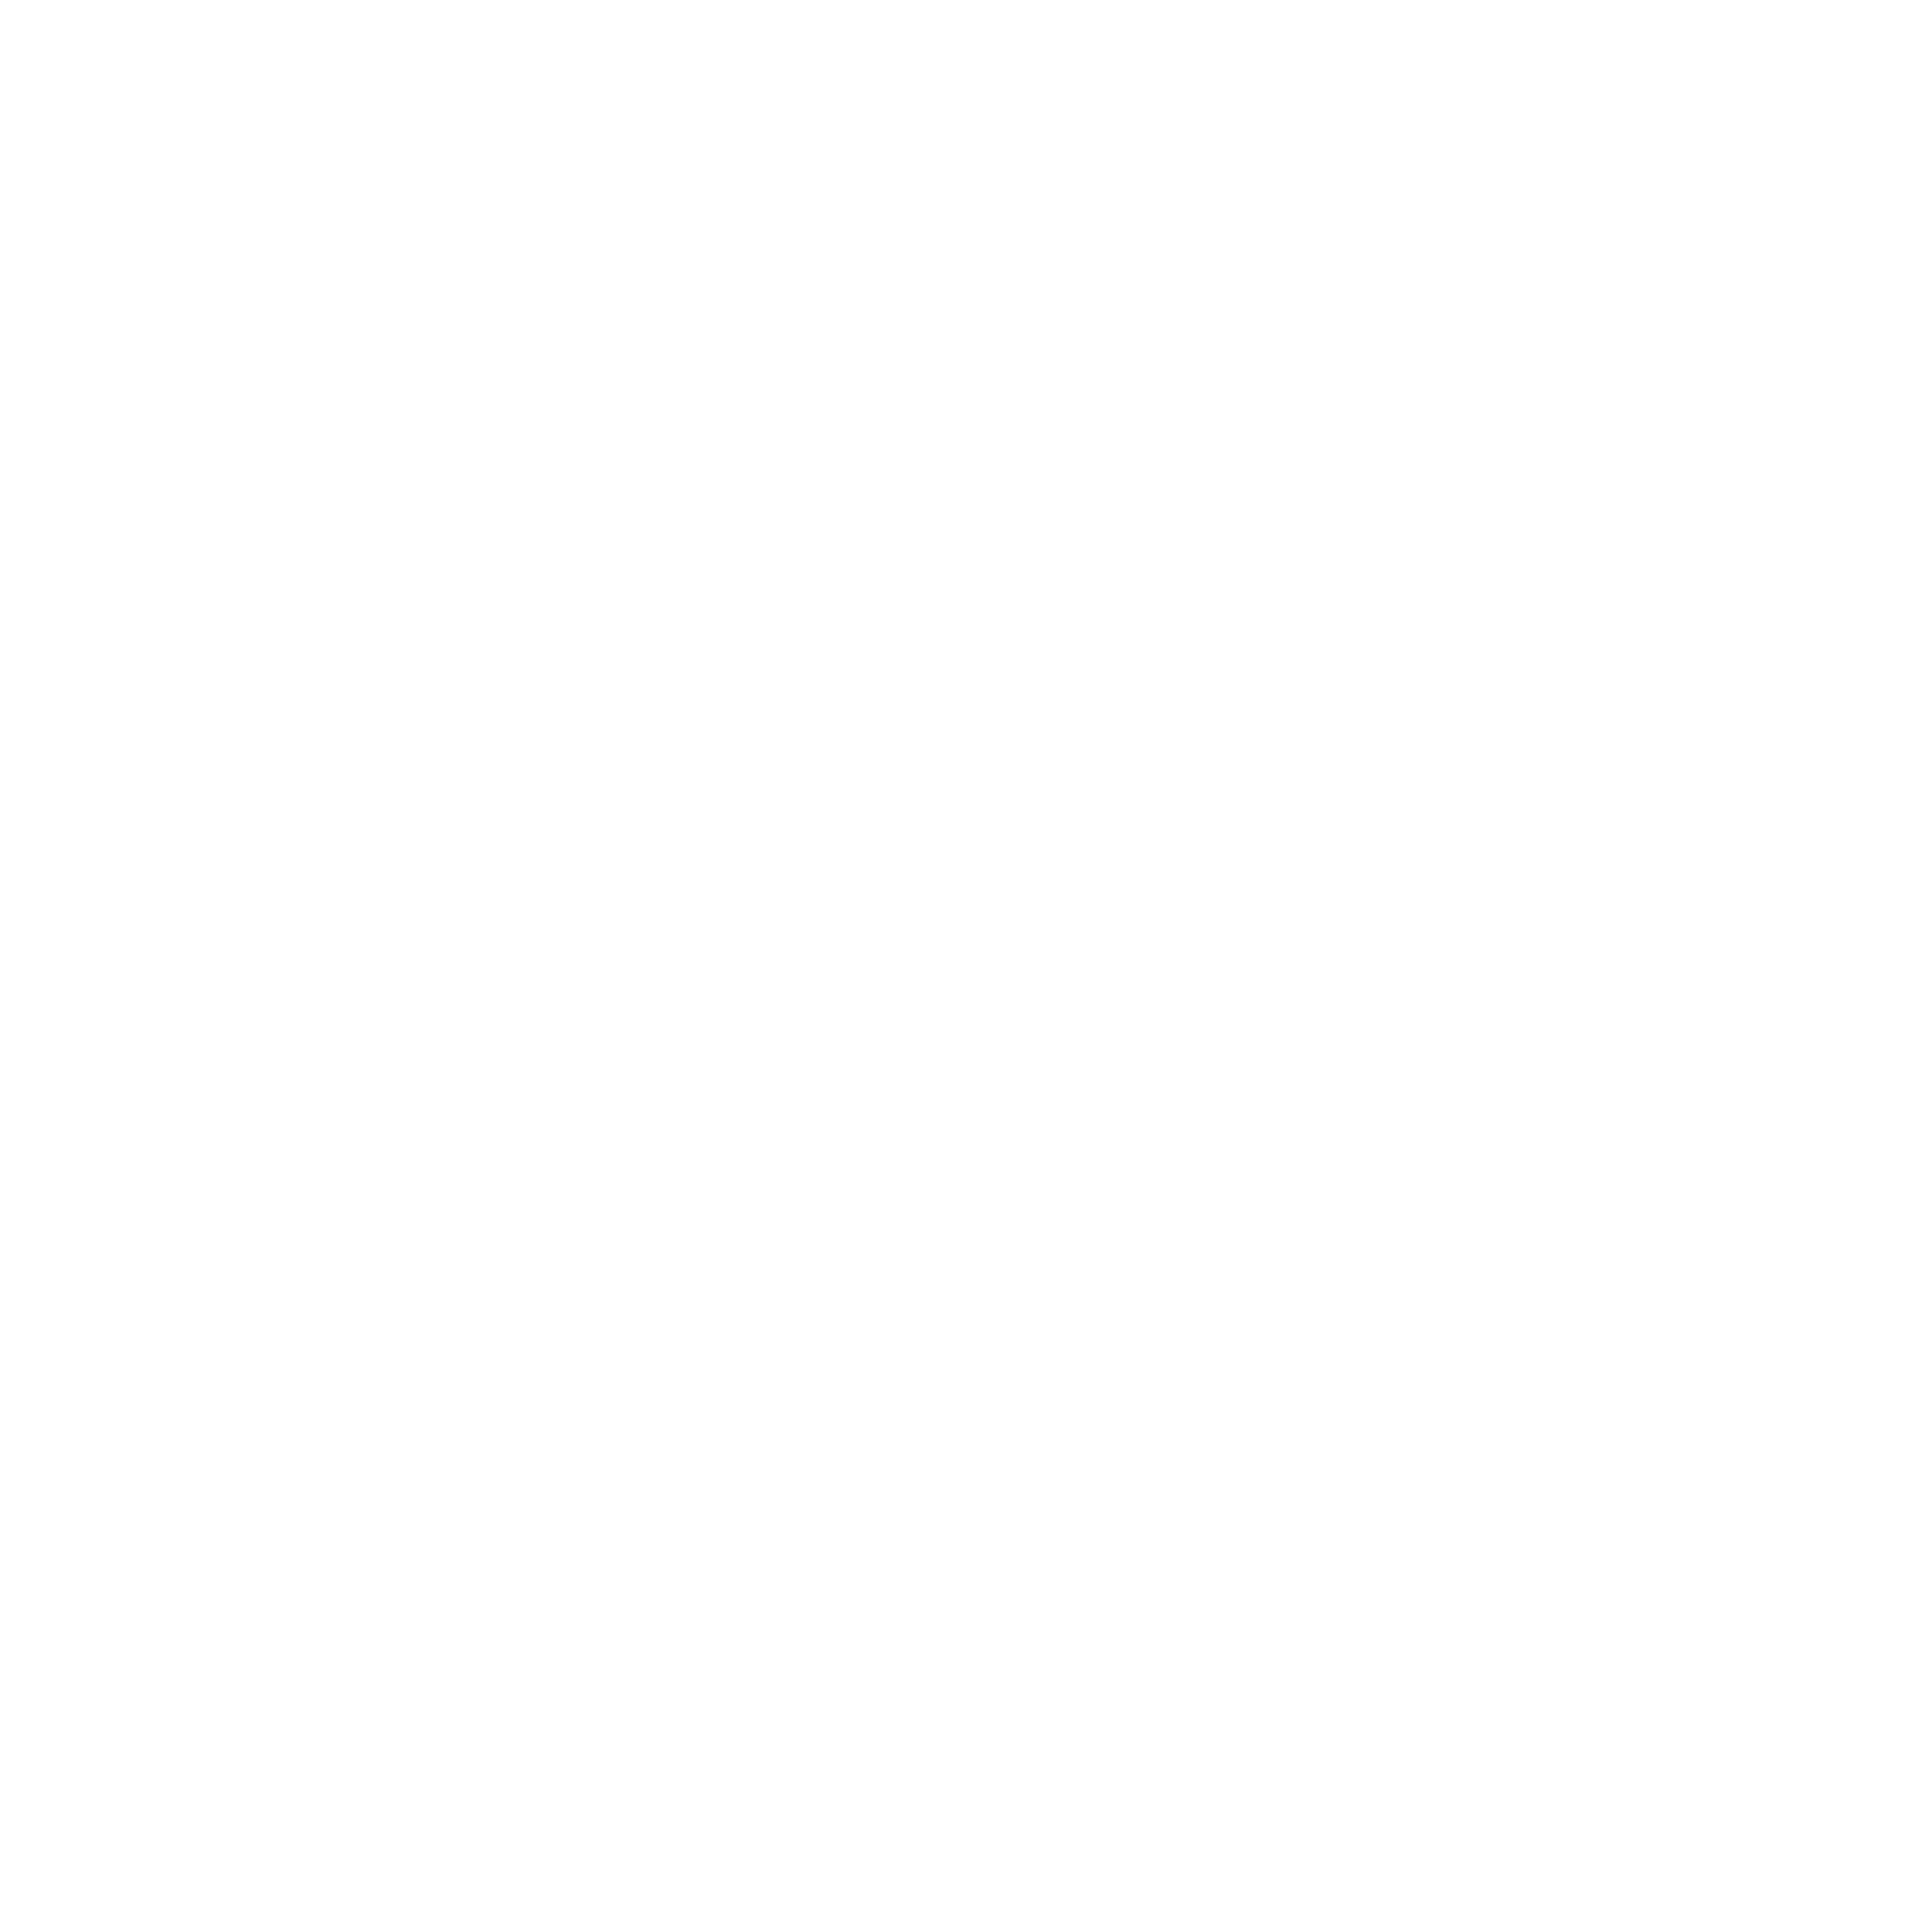 Roche Logo - Roche Logo PNG Transparent & SVG Vector - Freebie Supply